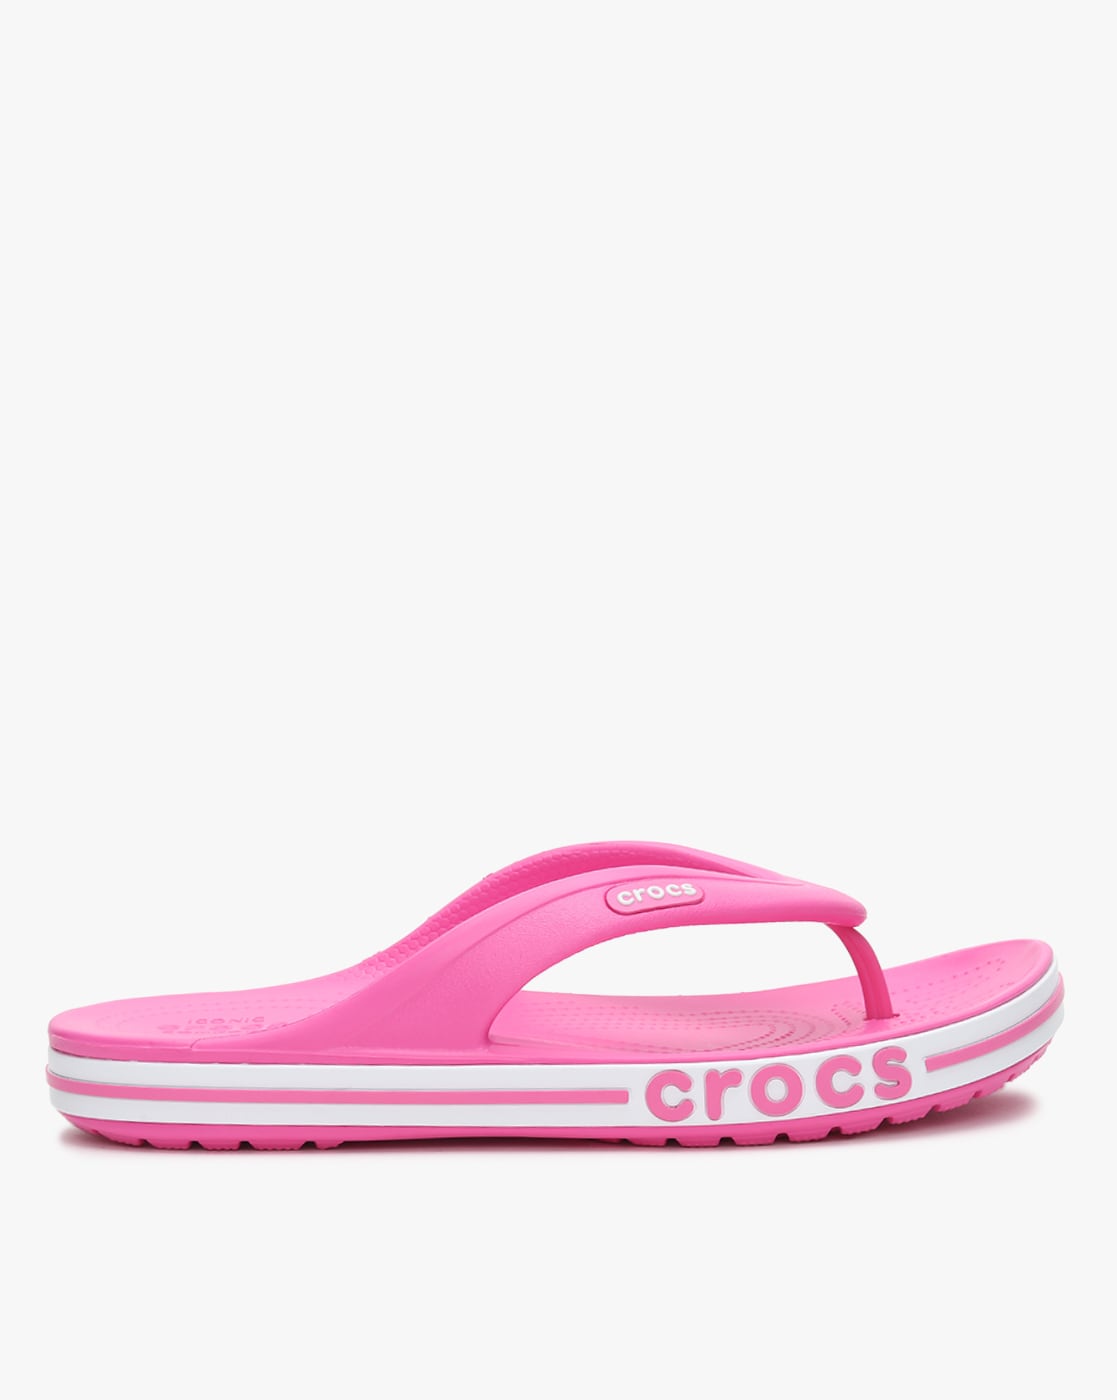 Crocs Black Slippers Women Size 9 w, lightly used, good cond. | eBay-thanhphatduhoc.com.vn